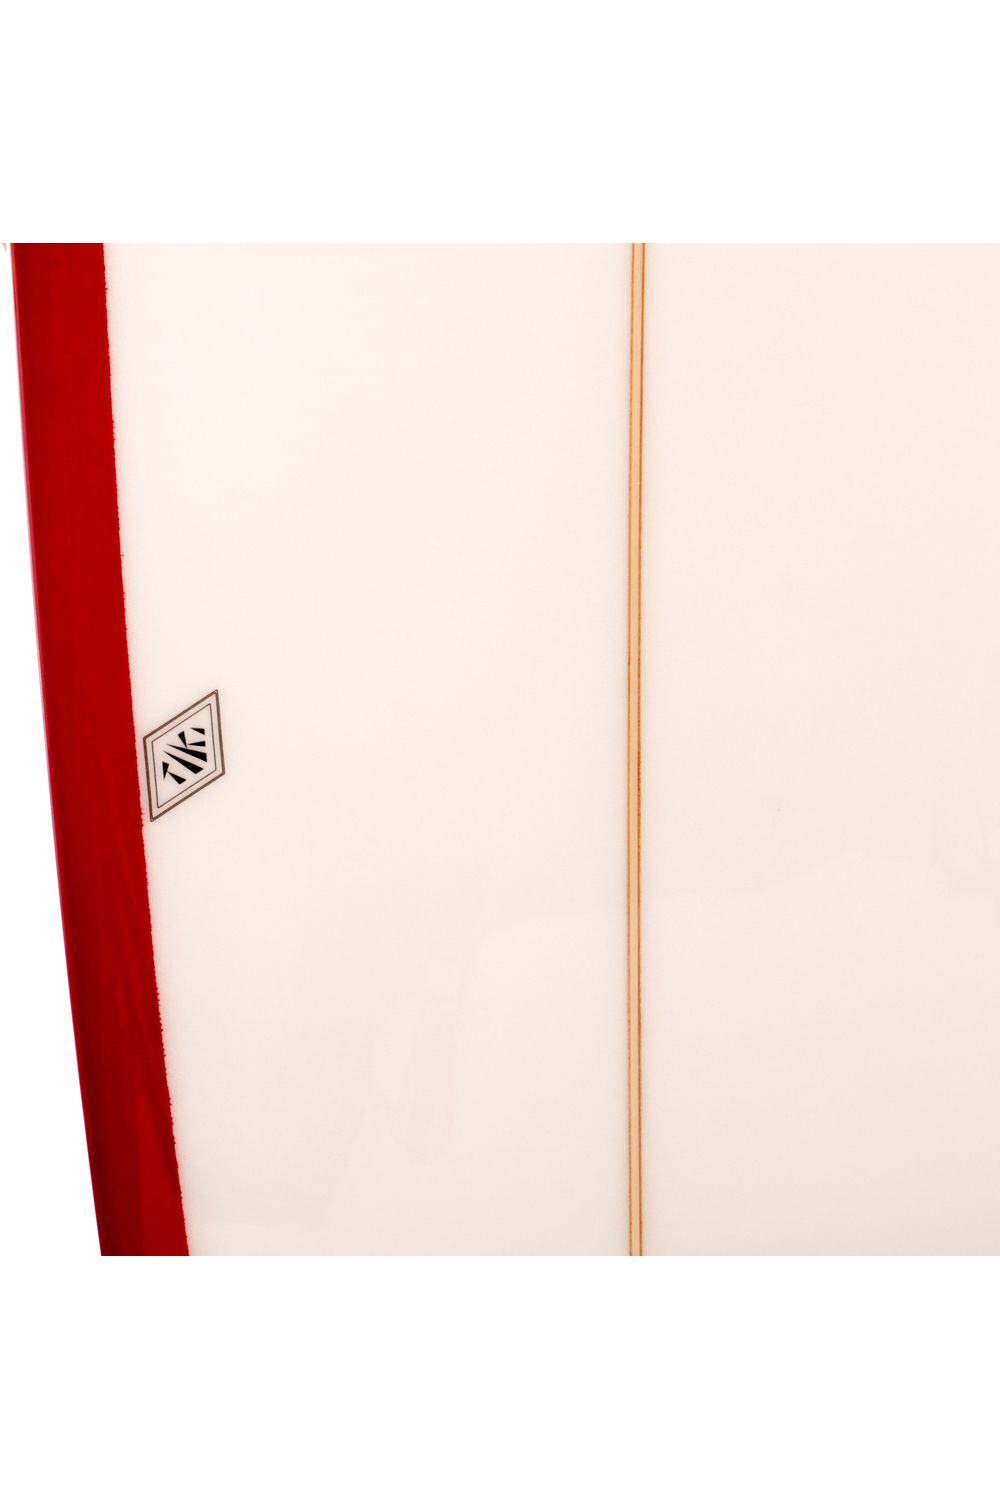 Tiki Custom Surfboard - 9'3 Totem Mal - Savvy Red